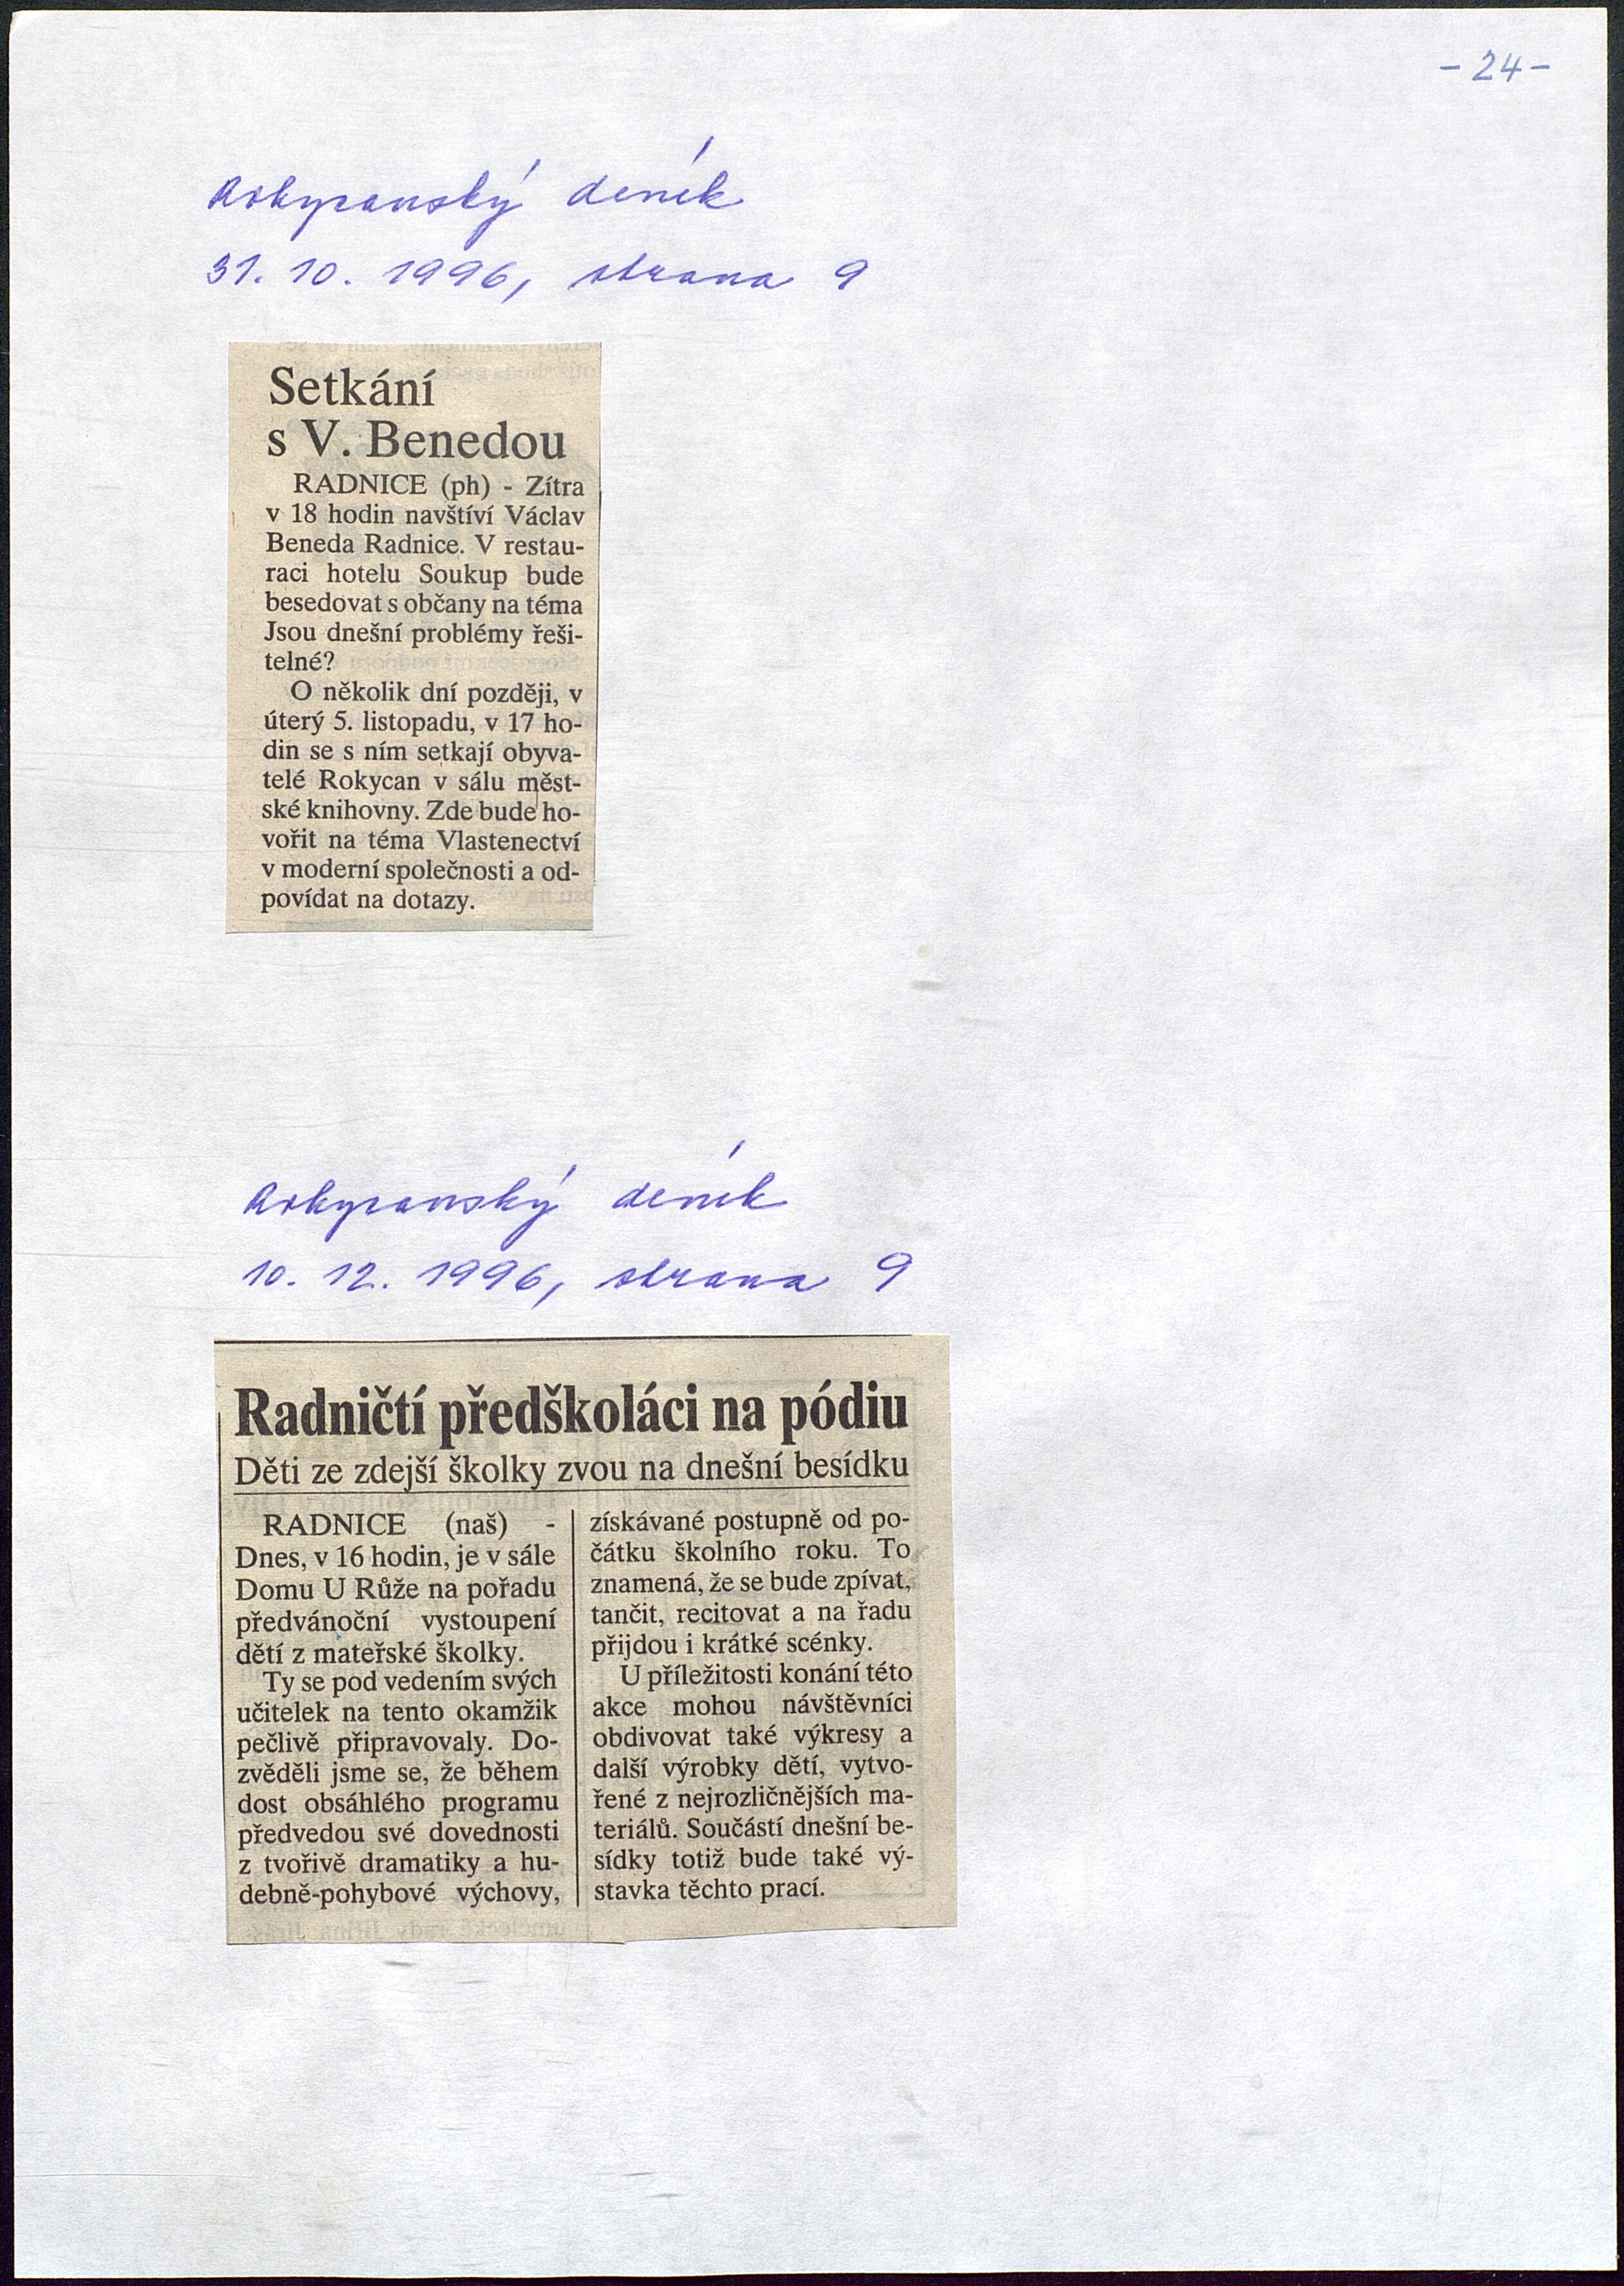 164. soap-ro_00979_mesto-radnice-priloha-1995-1998_1640